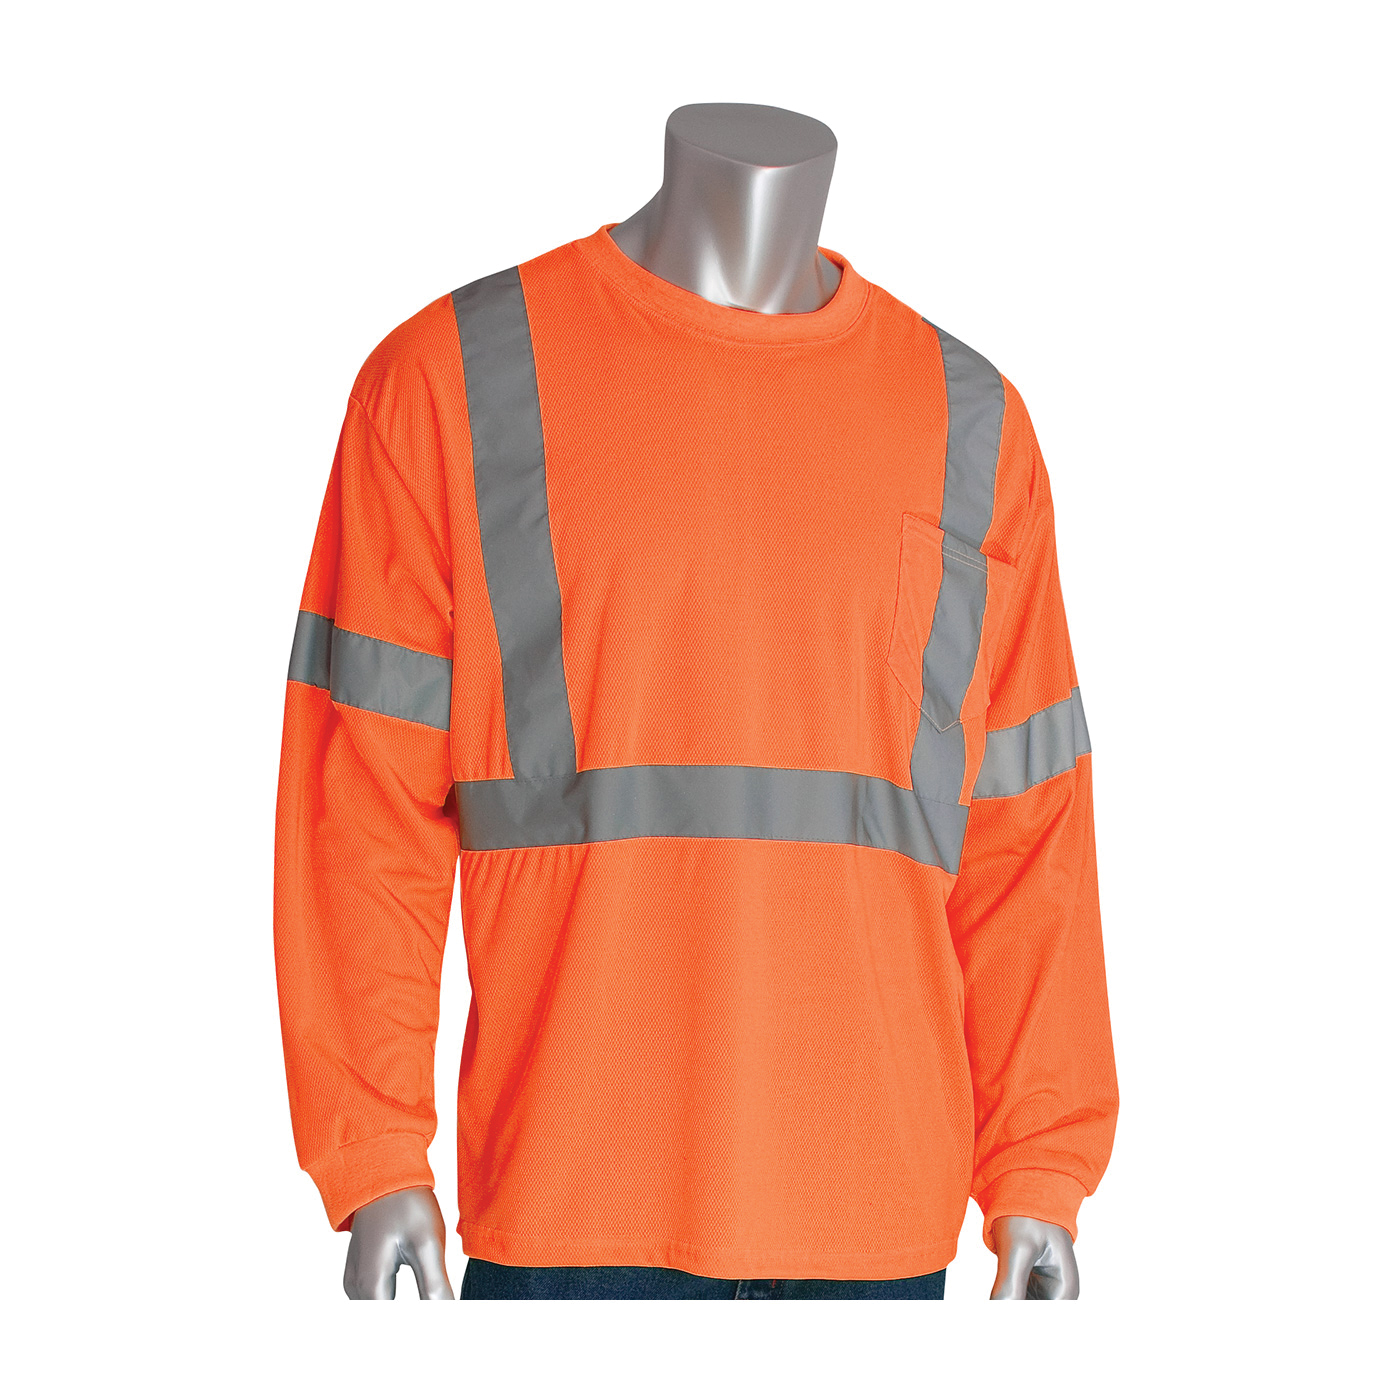 PIP® 313-1300-OR/L Long Sleeve Crew Neck T-Shirt, L, Hi-Viz Orange, Bird's Eye Polyester, 29.1 in L